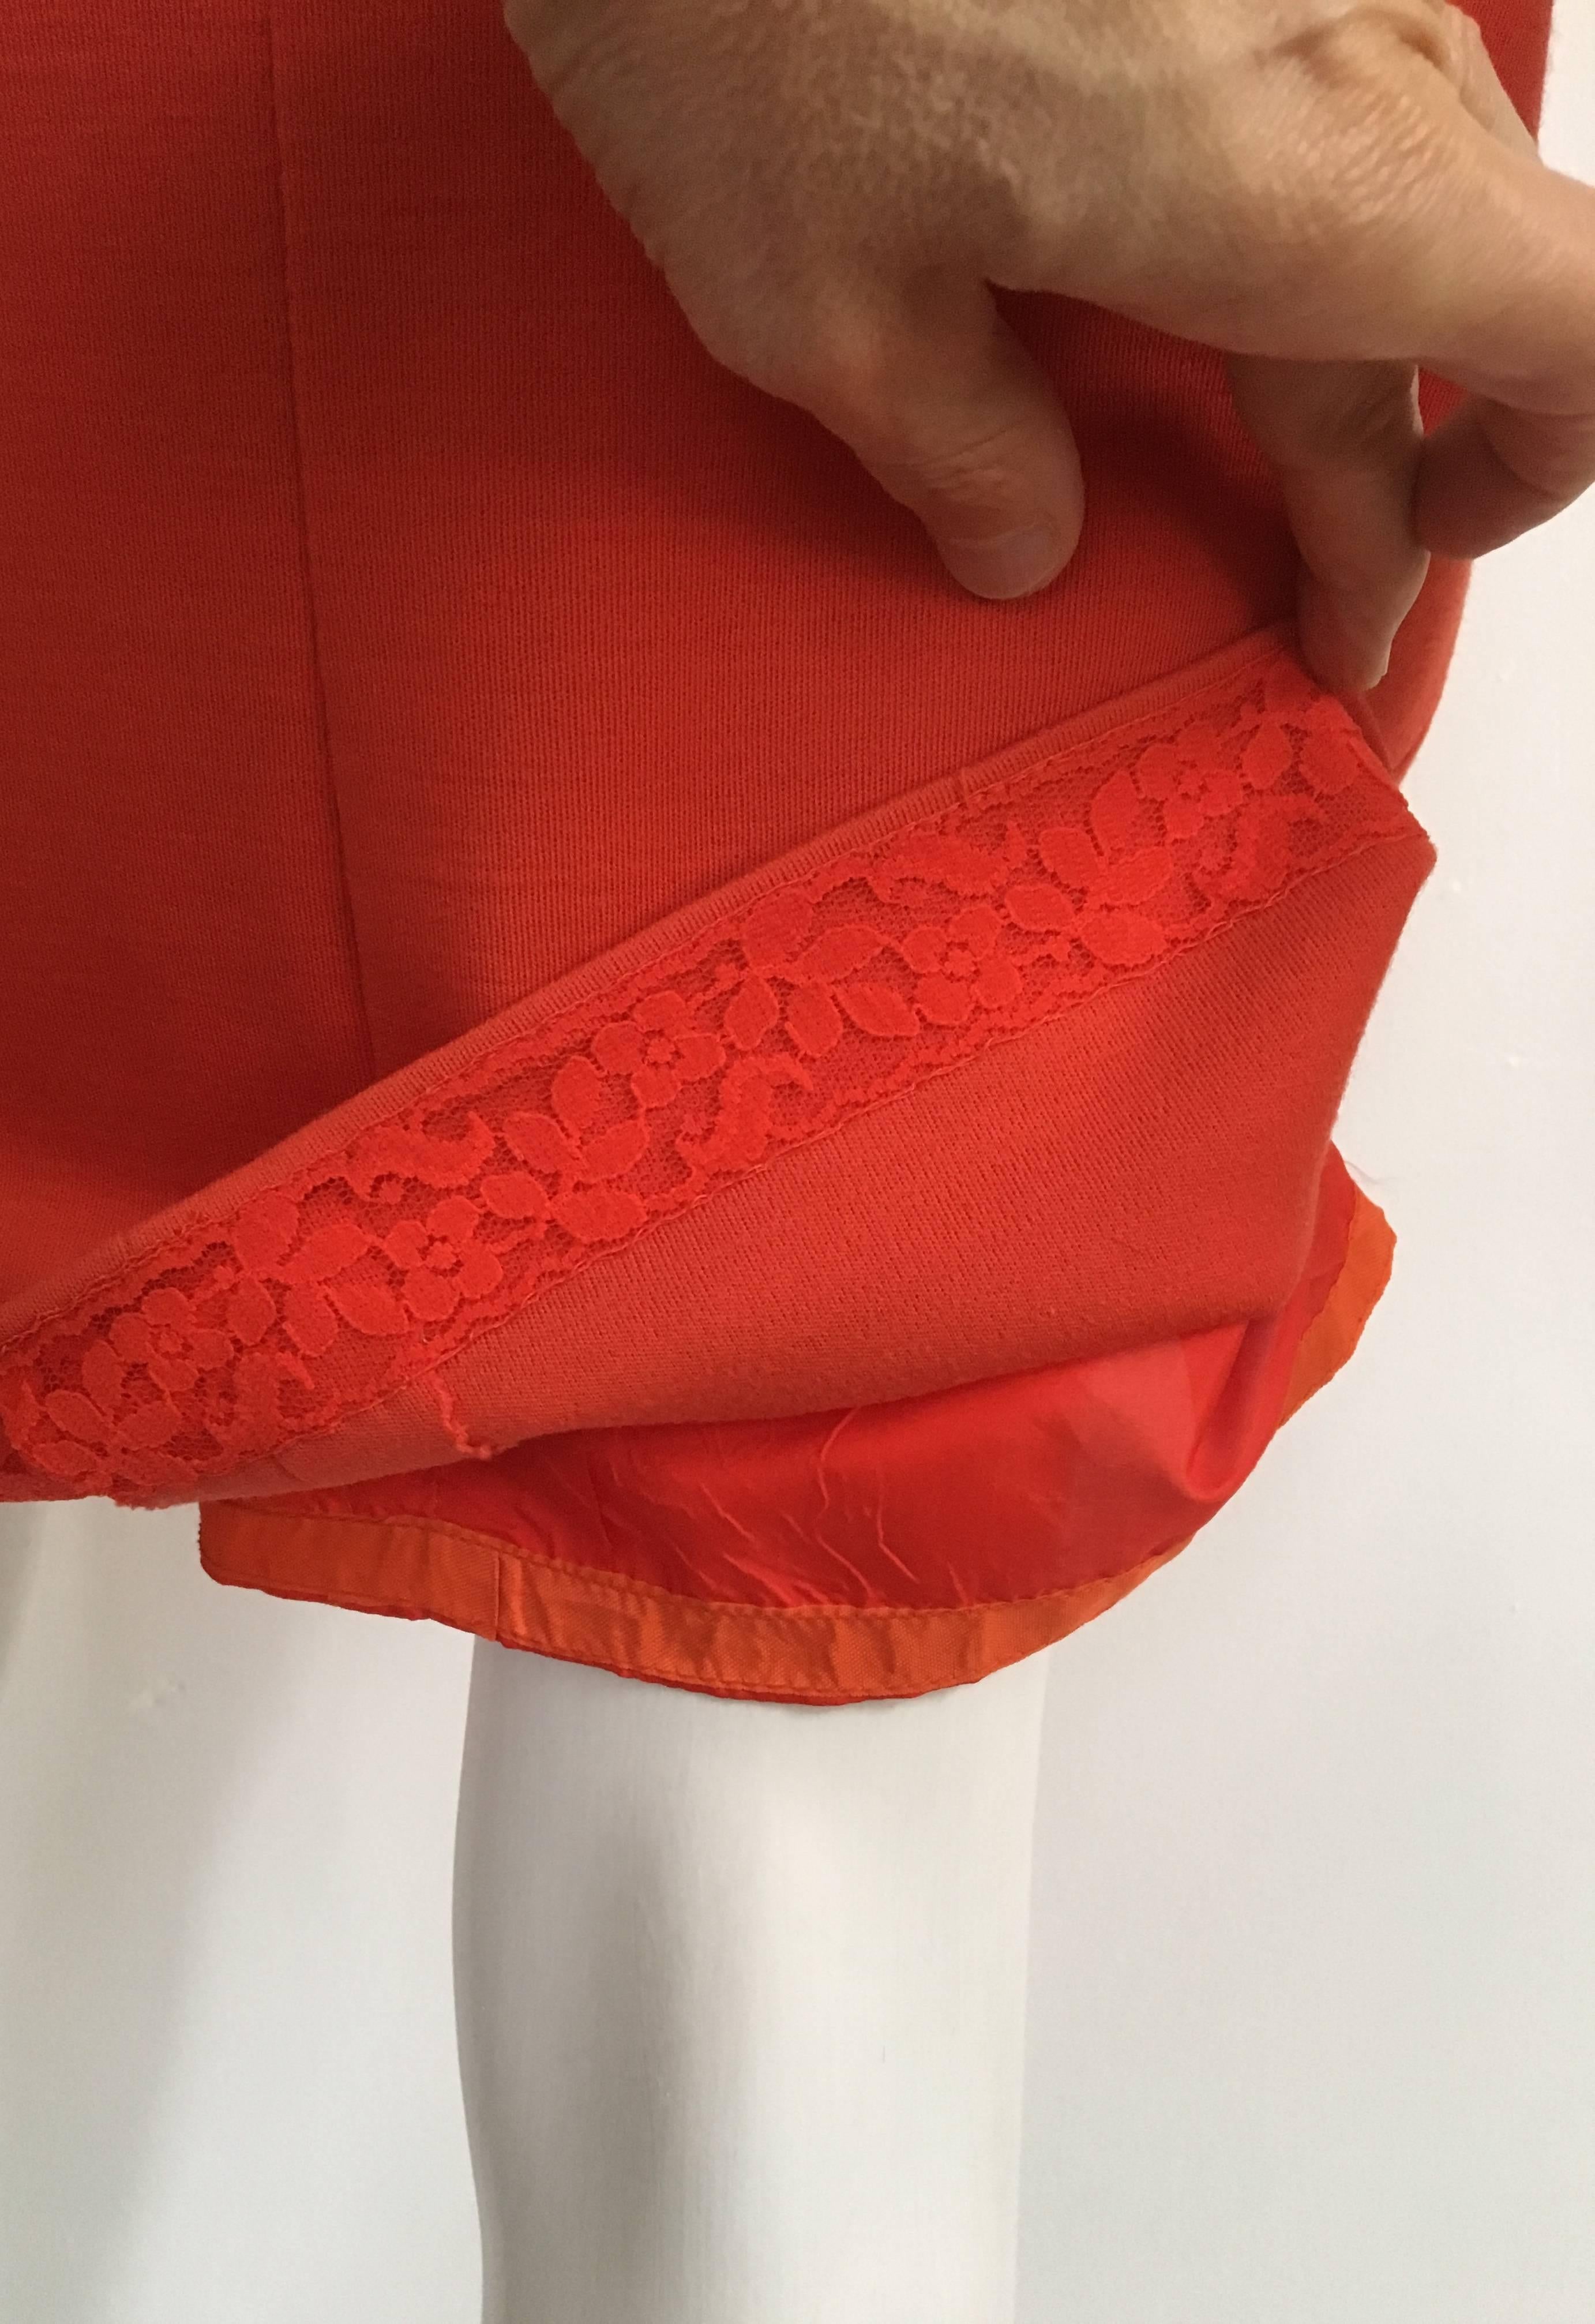 Bill Blass for Maurice Rentner 1960s Orange Wool Knit Dress Size 6. 2